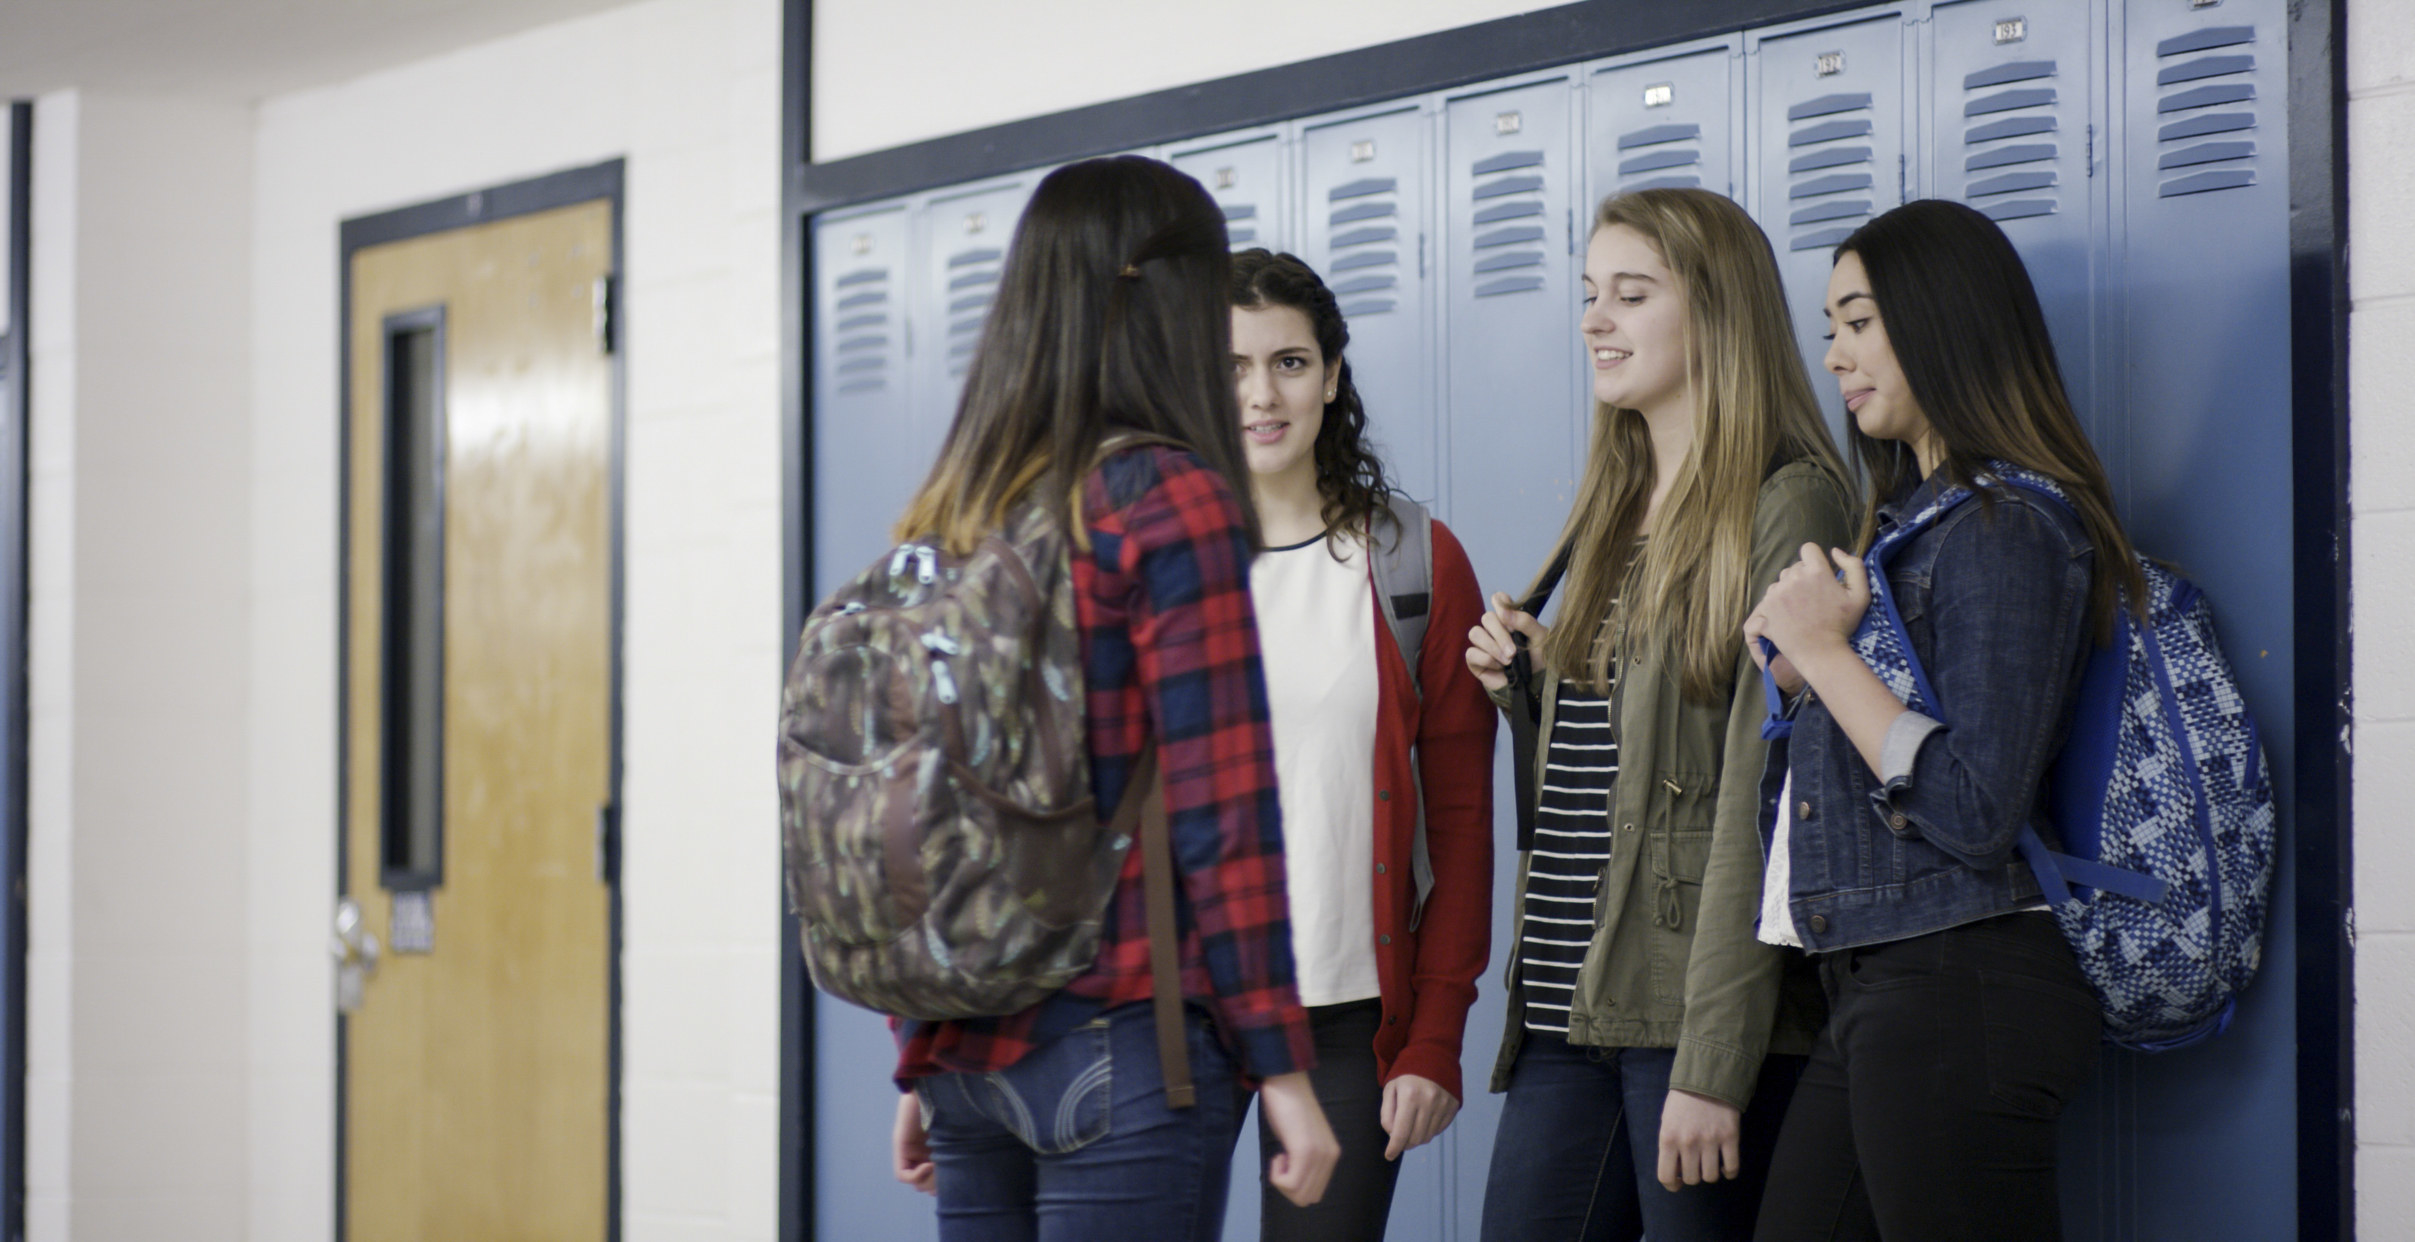 High school girls congregating near the lockers